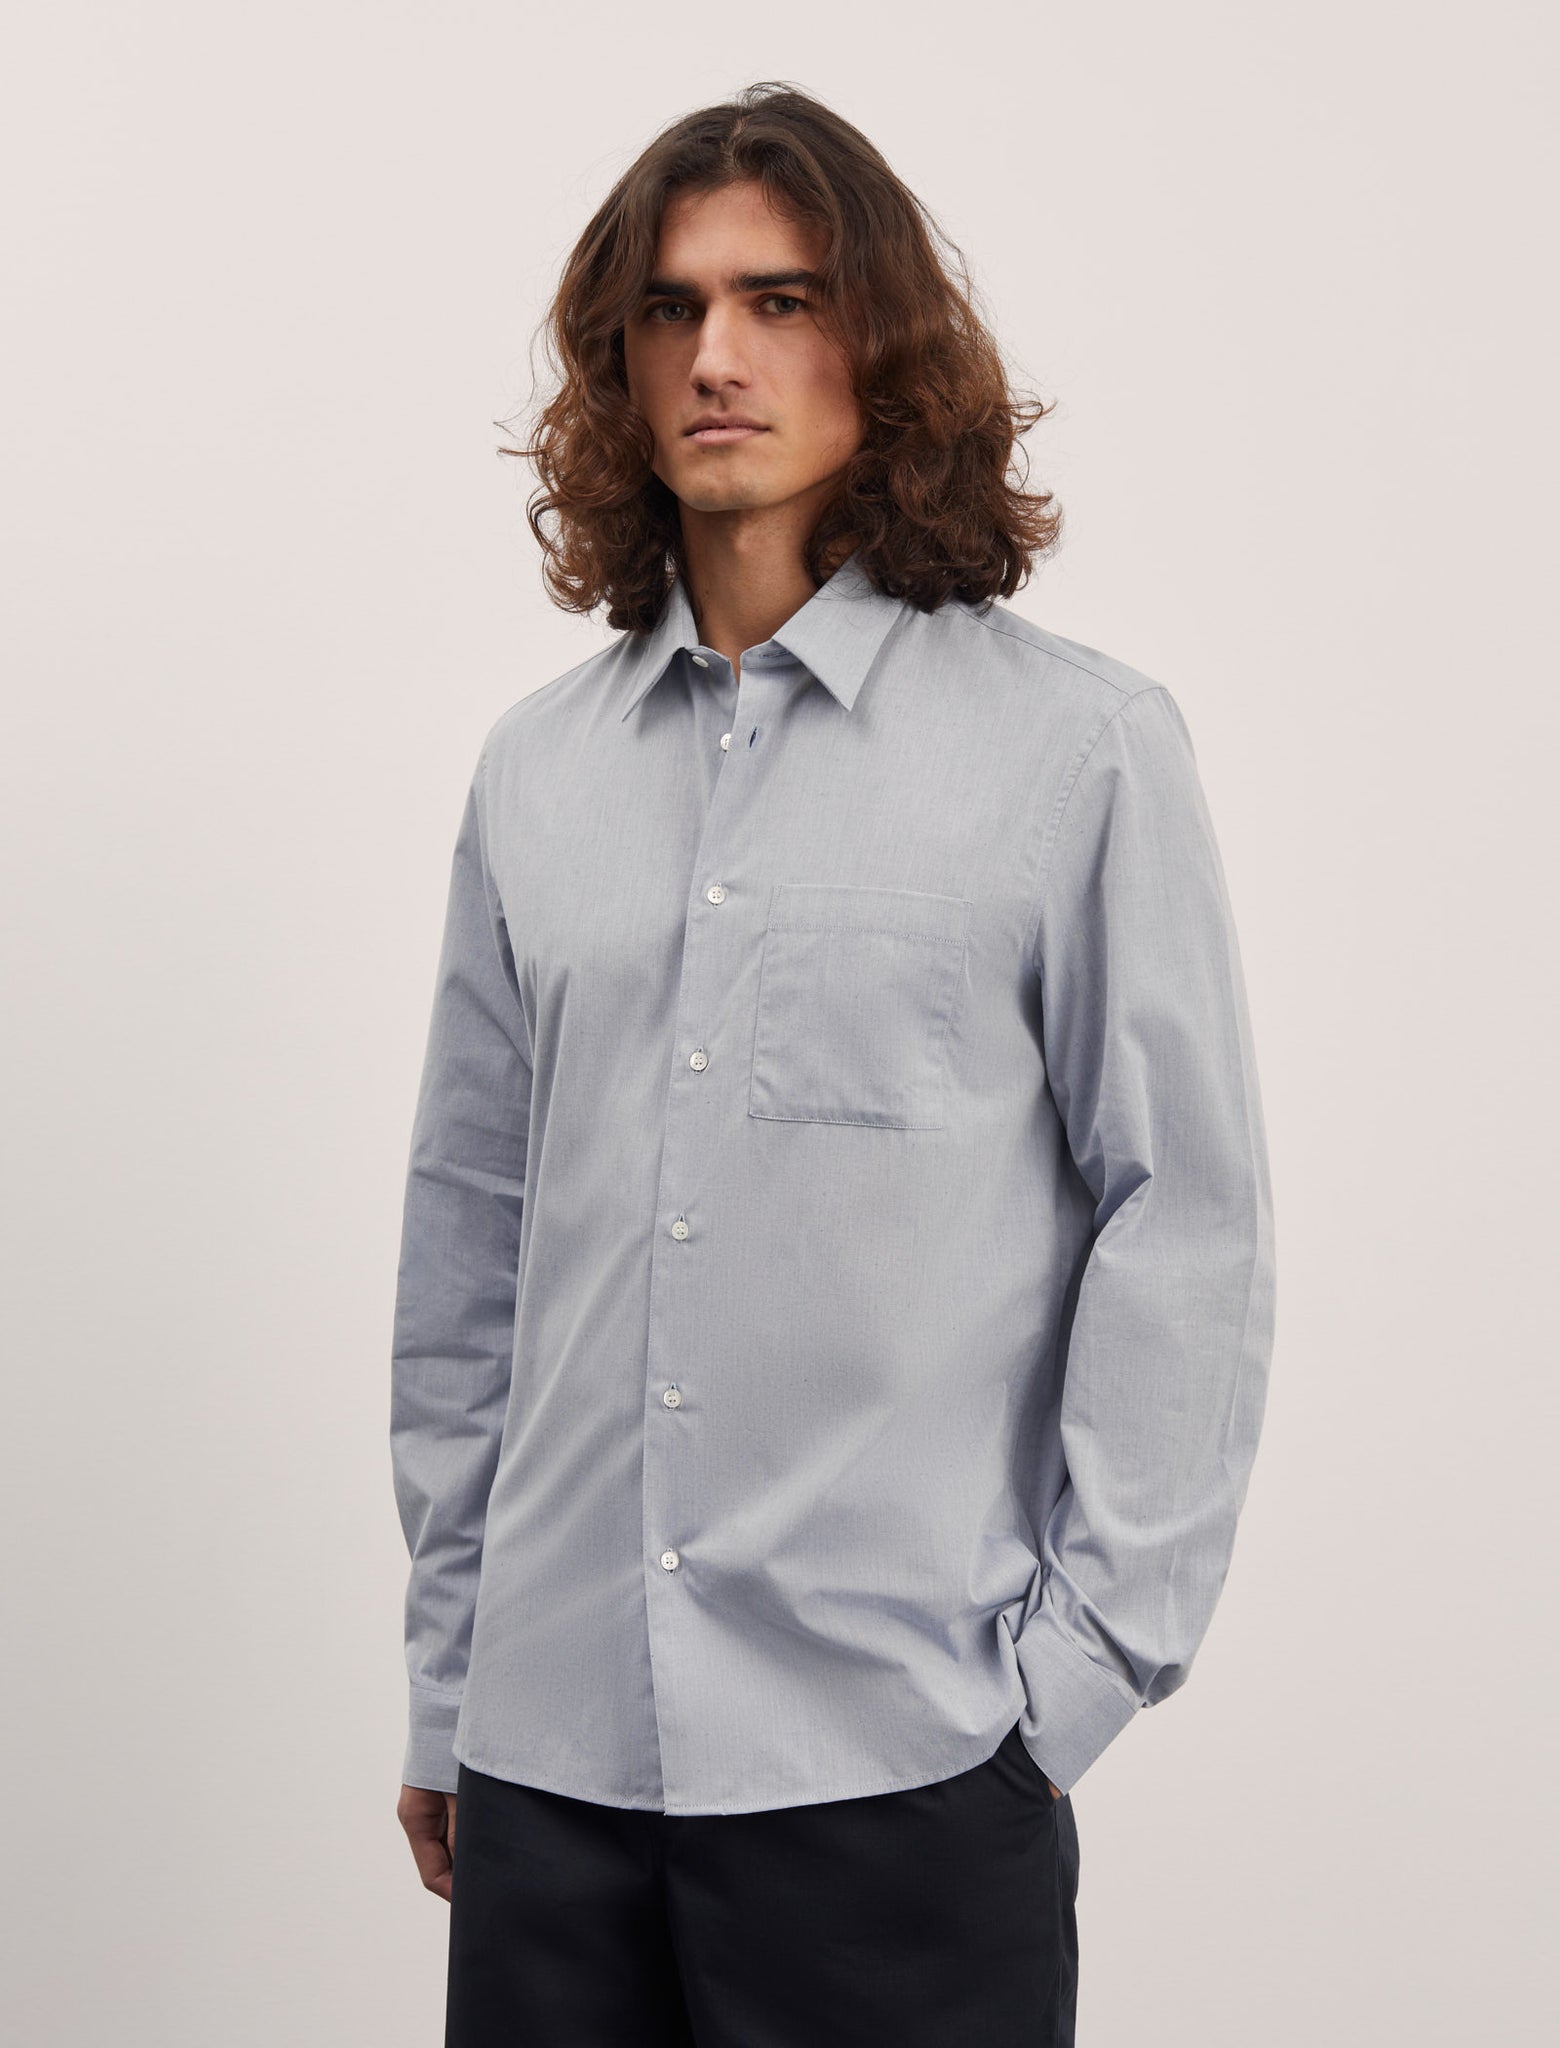 ANOTHER Shirt 3.0, Blue Grey